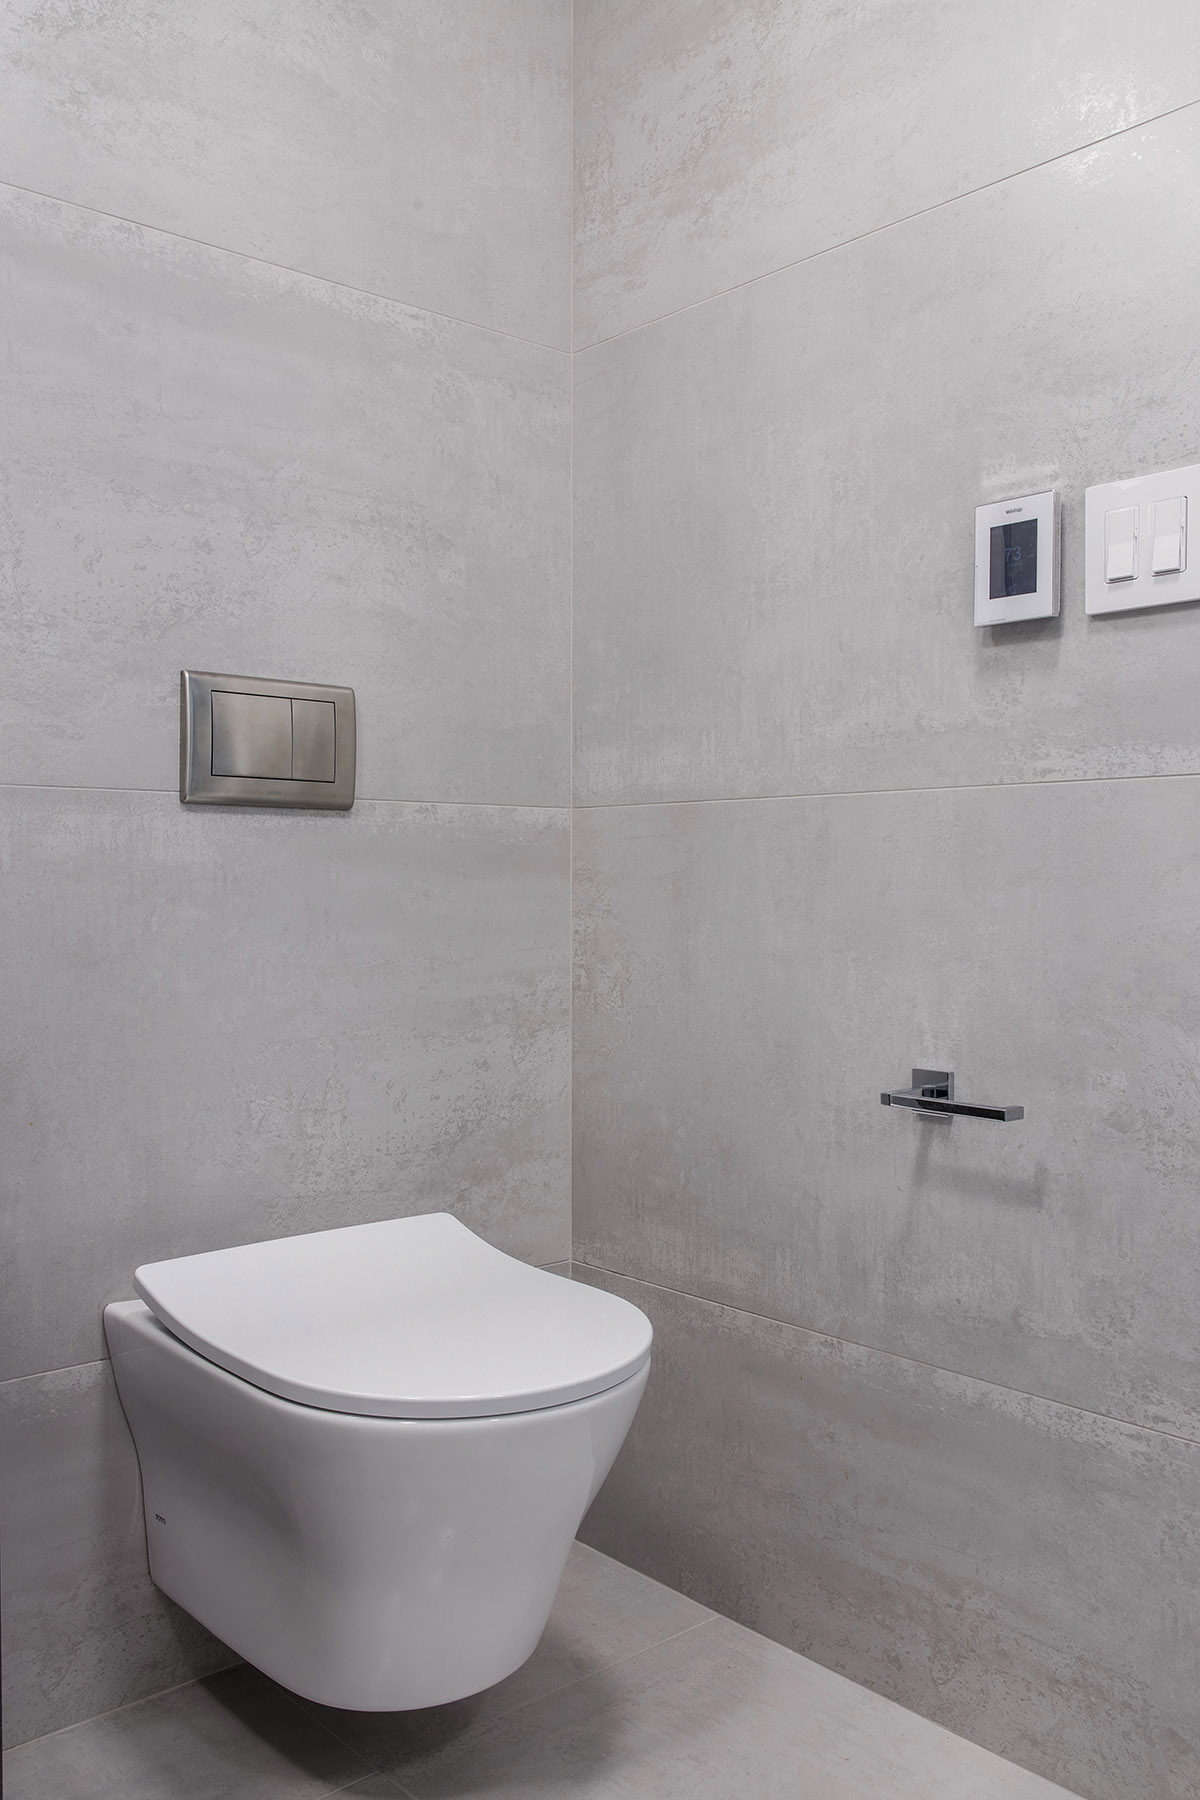 Modern Porcelain Bathroom Design in a New York Loft